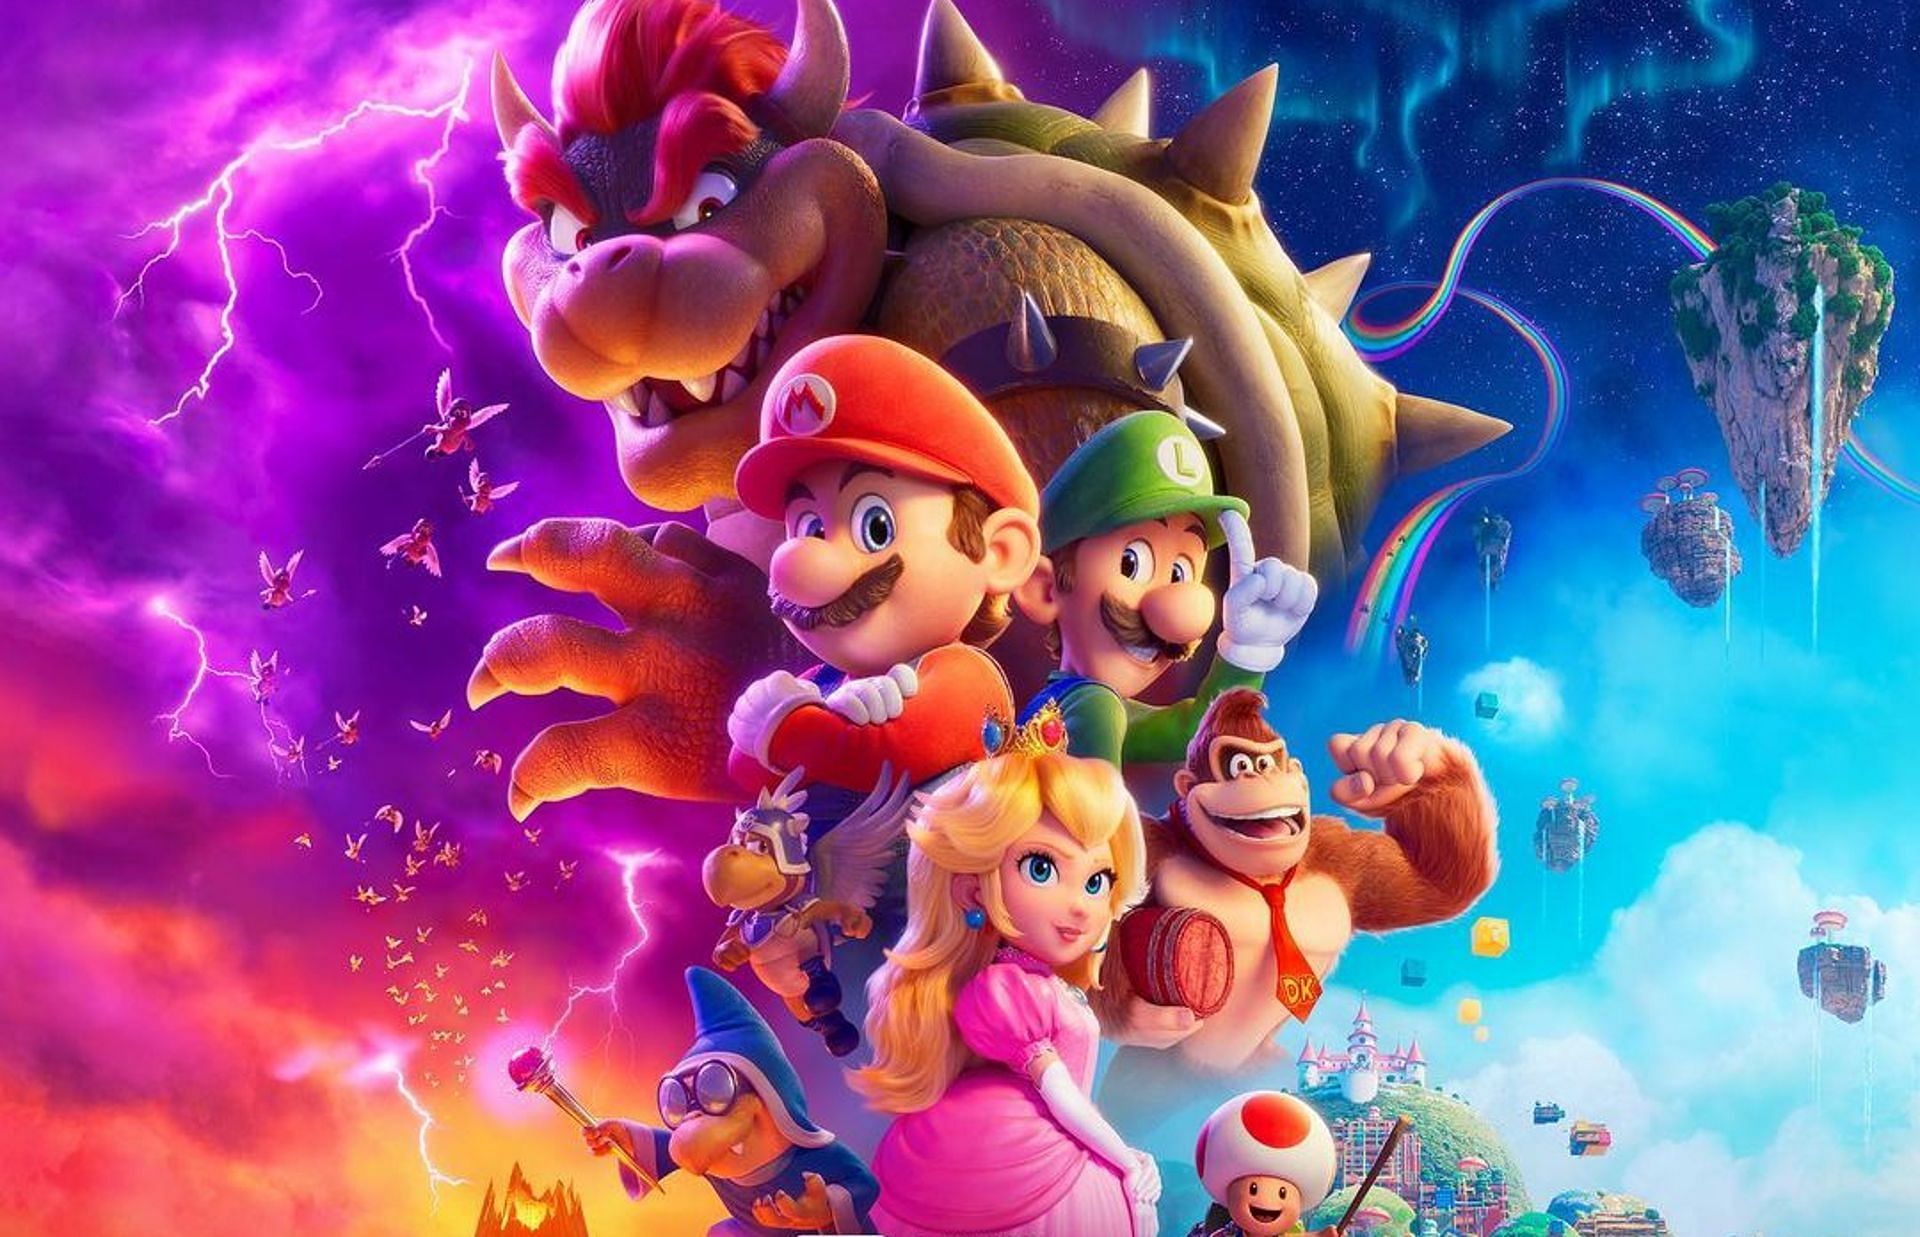 New Super Mario Bros. Movie confirmed with official release date (Image via Instagram/@supermariomovie)